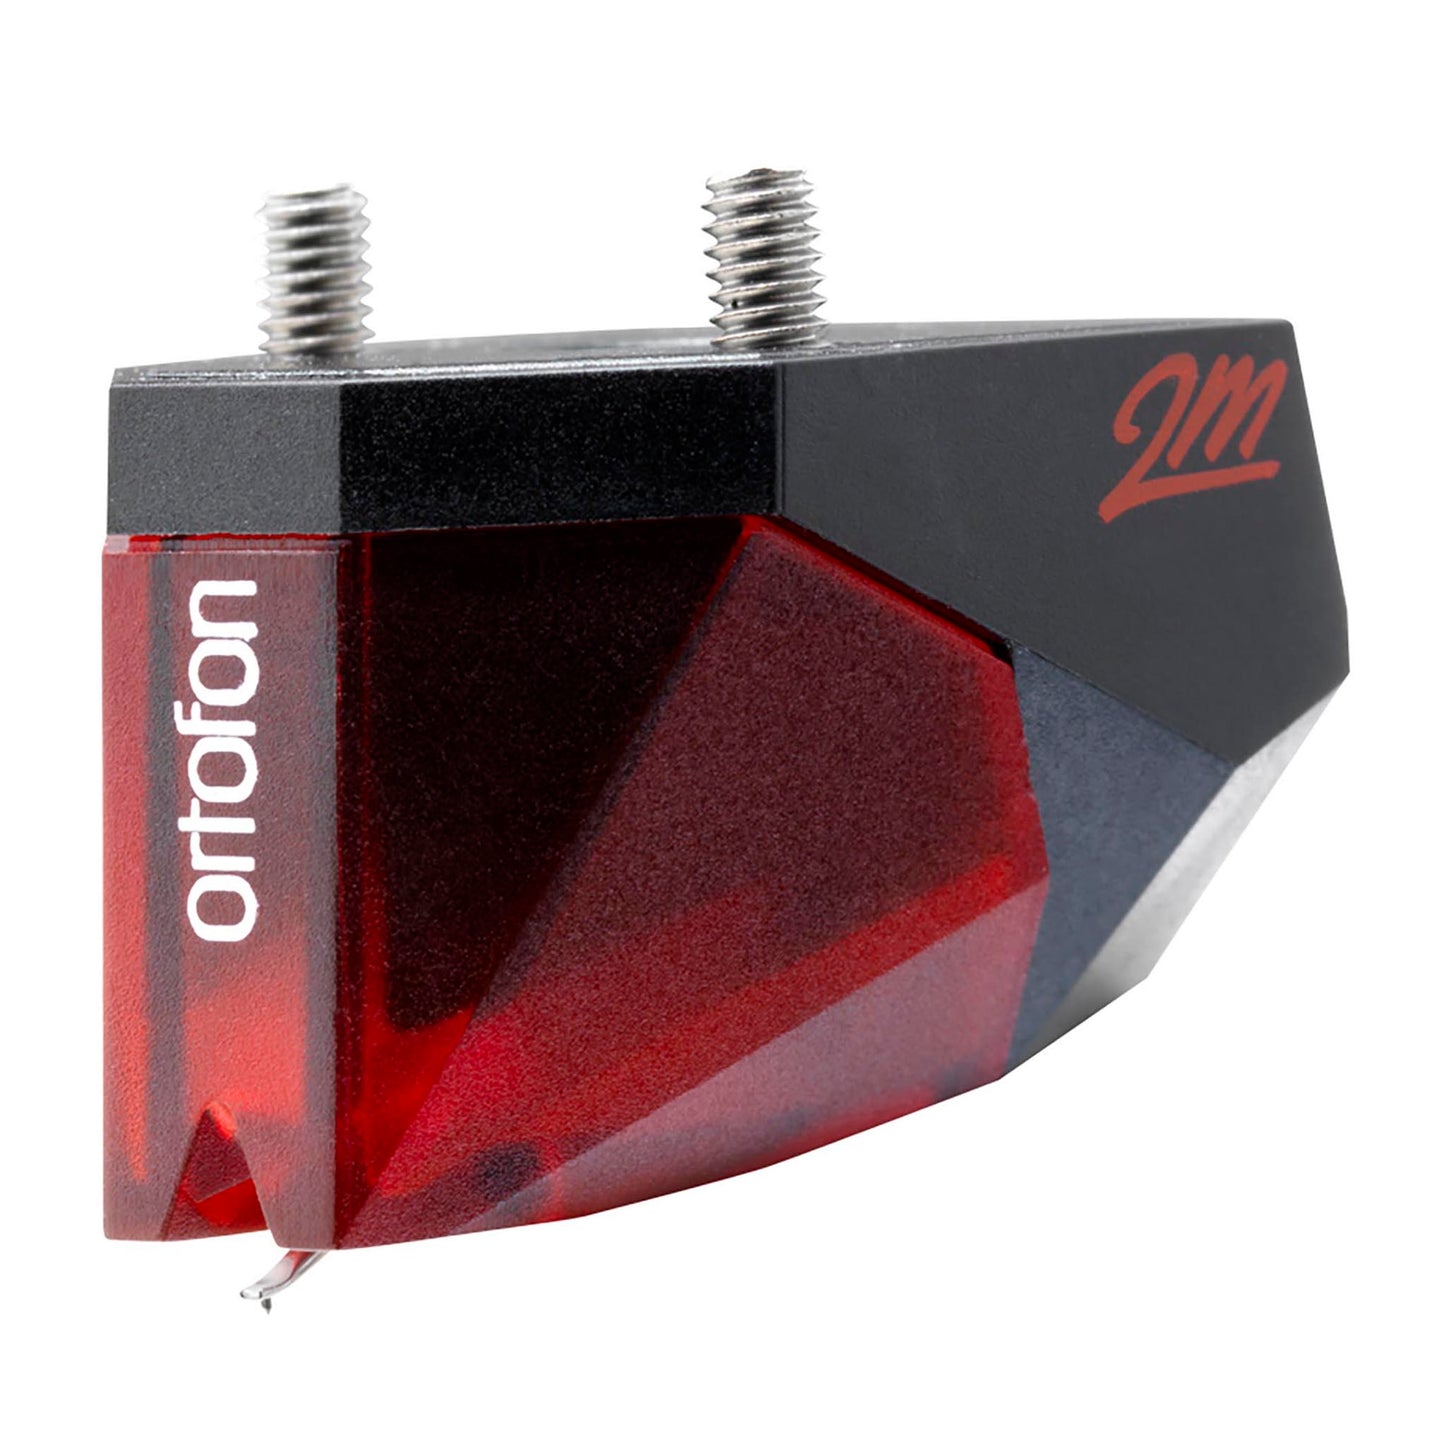 Ortofon 2M Red Verso Moving Magnet Cartridge